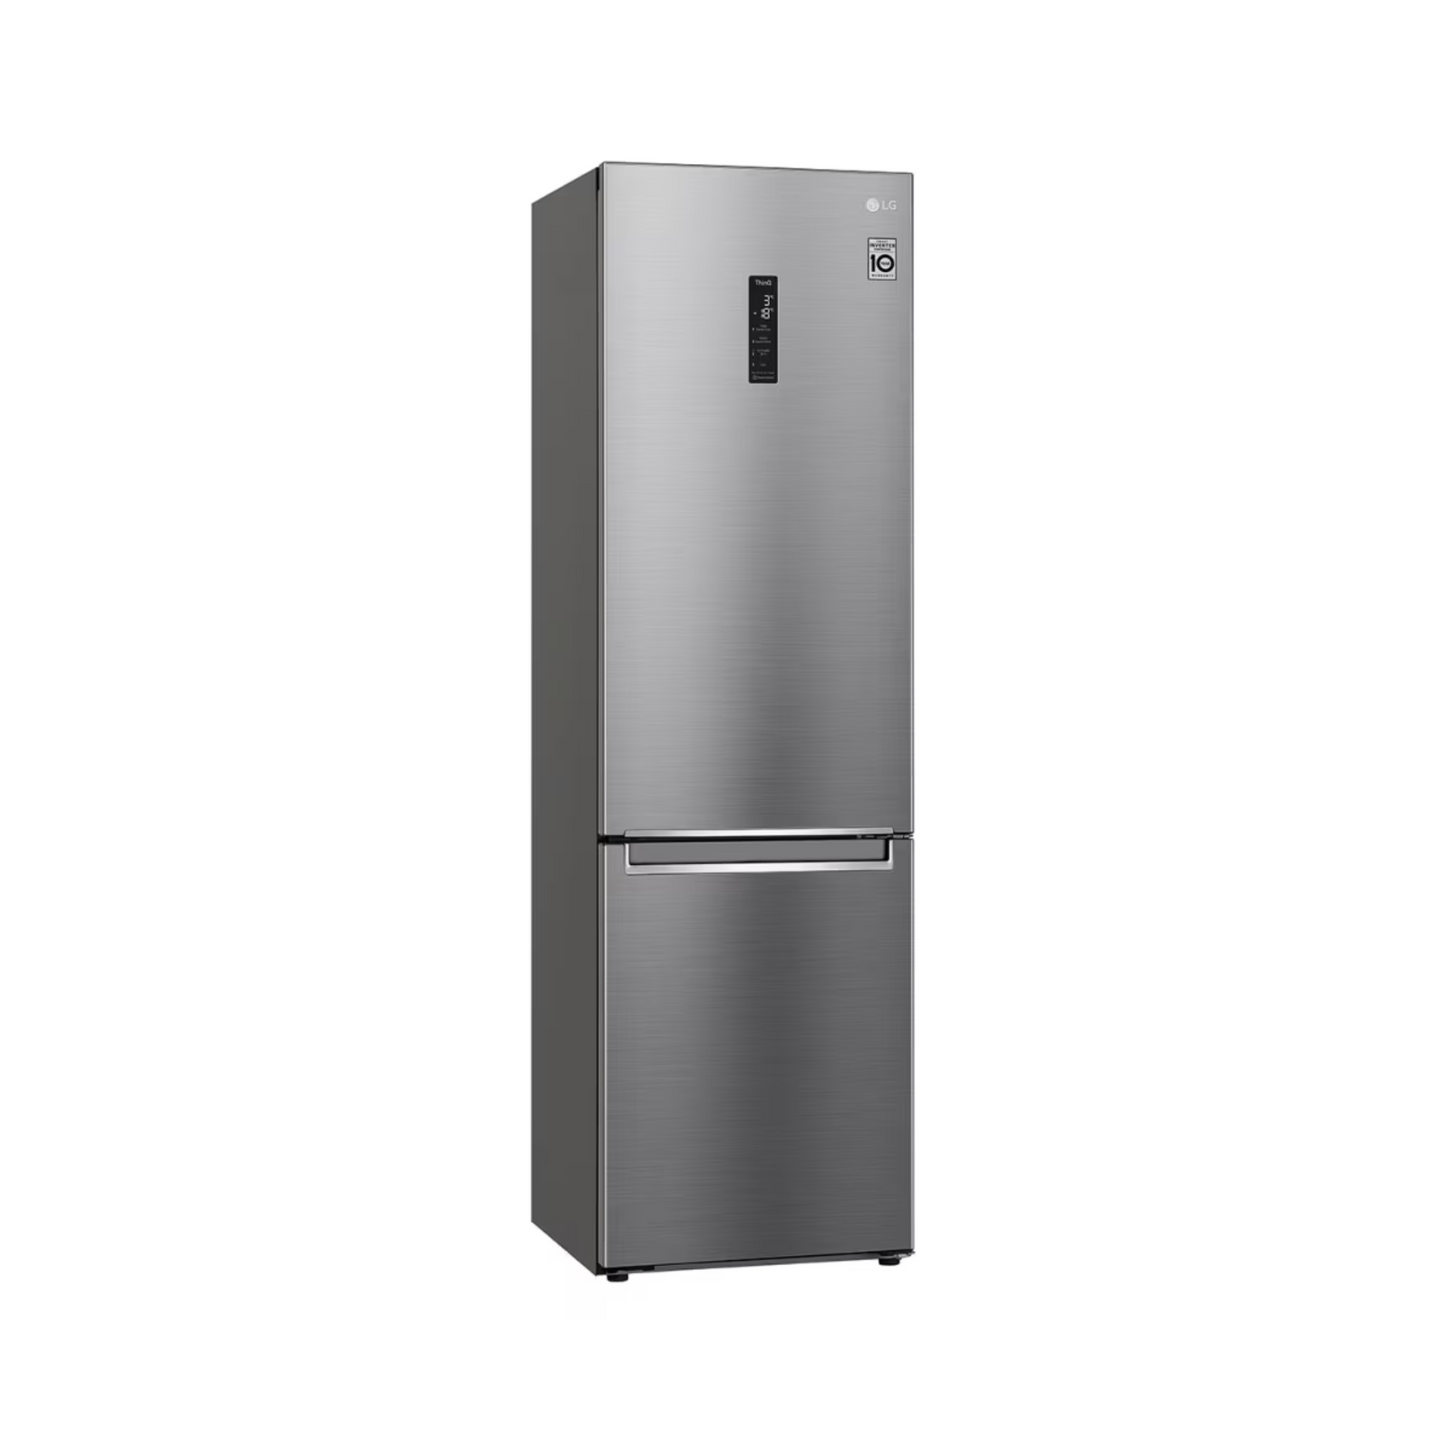 LG 384L Smart Energy Saving Combined Refrigerator, GBB72PZUGN